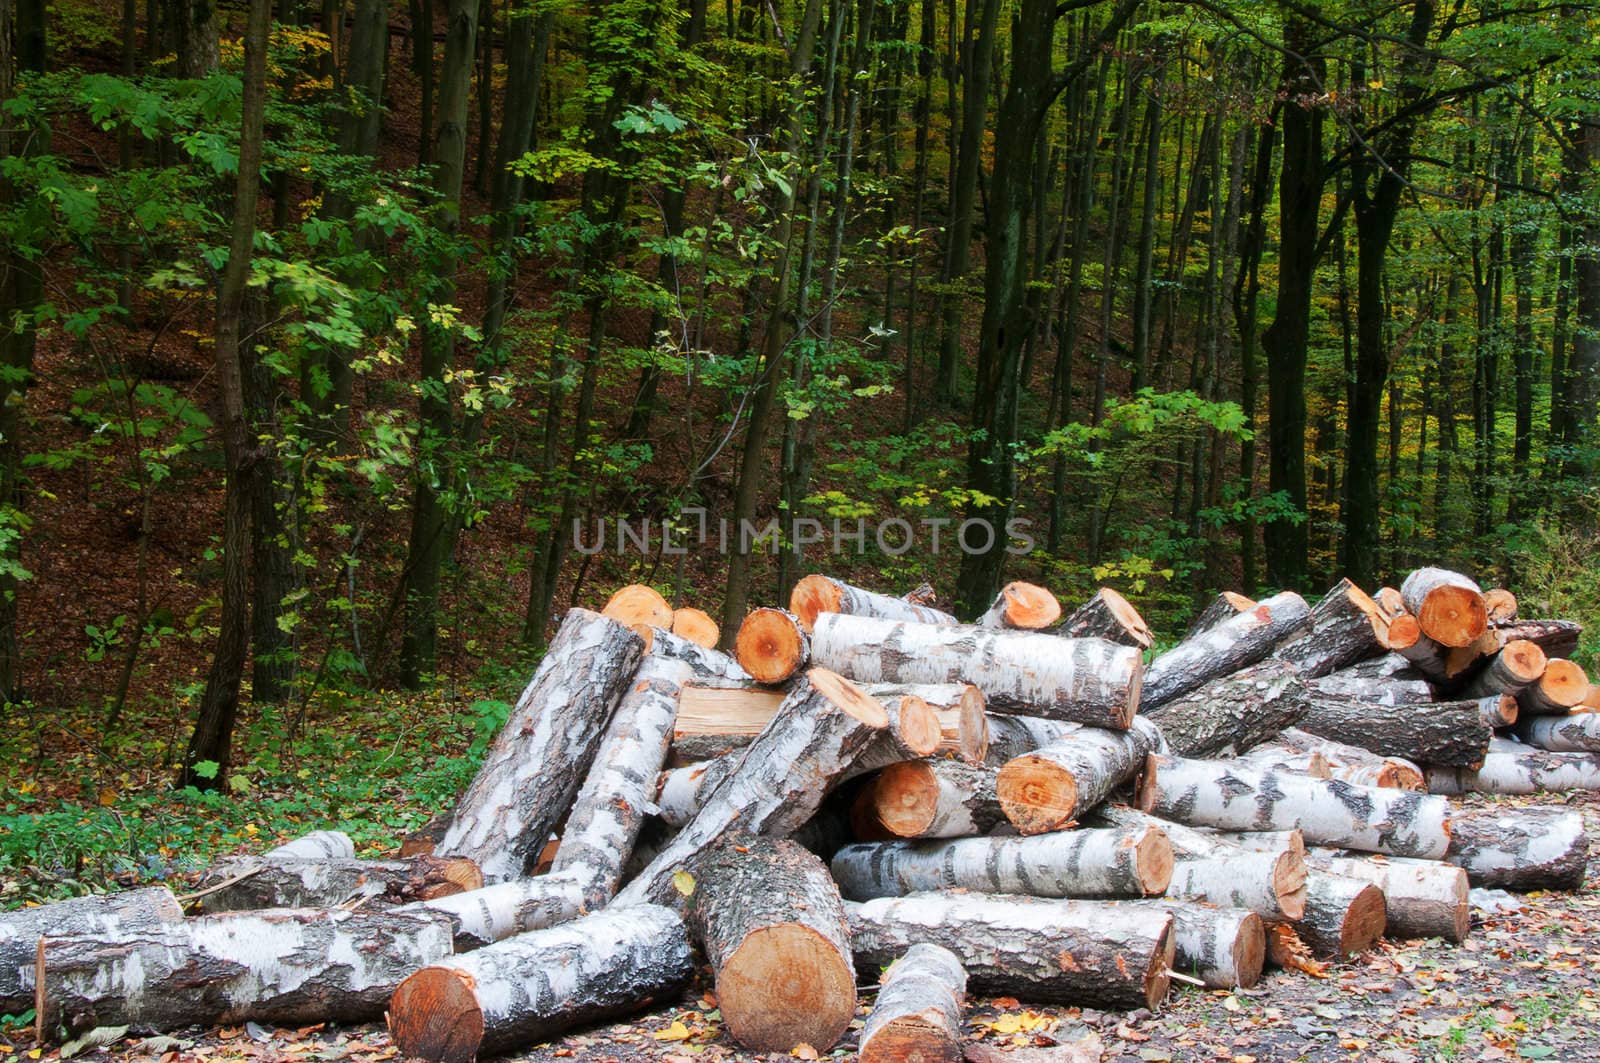 Firewood by ben44